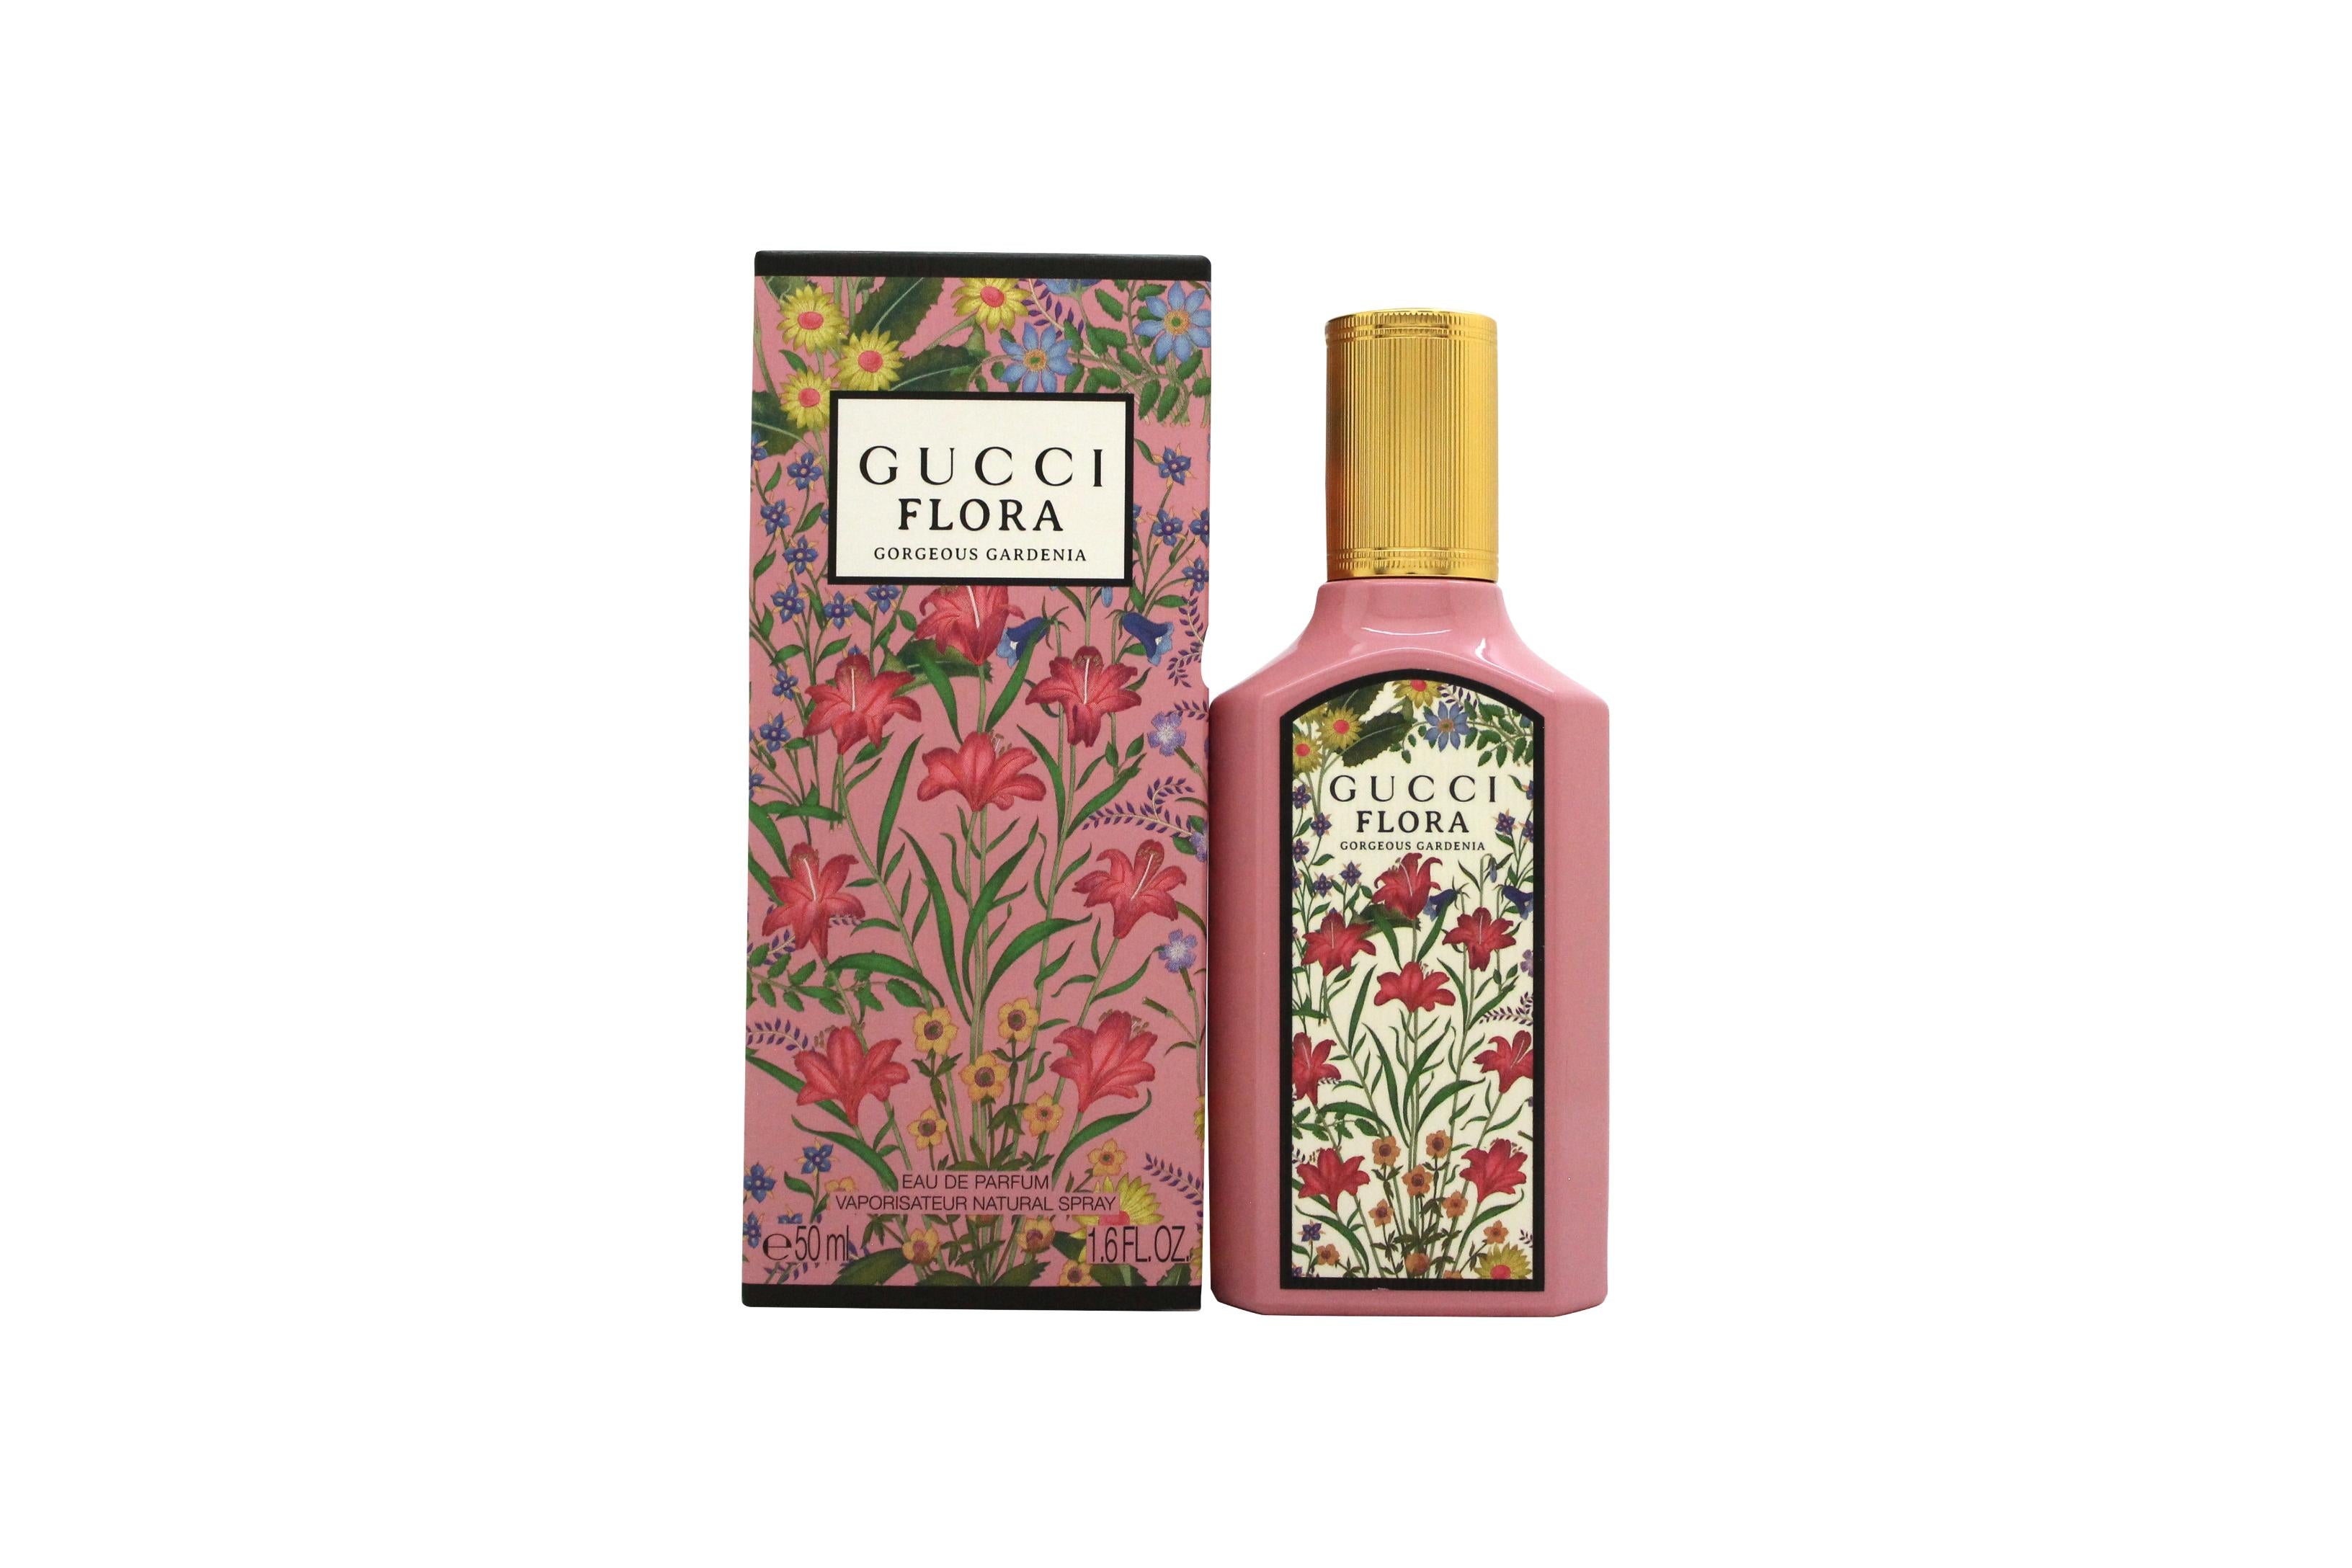 View Gucci Flora Gorgeous Gardenia Eau de Parfum 50ml Spray information